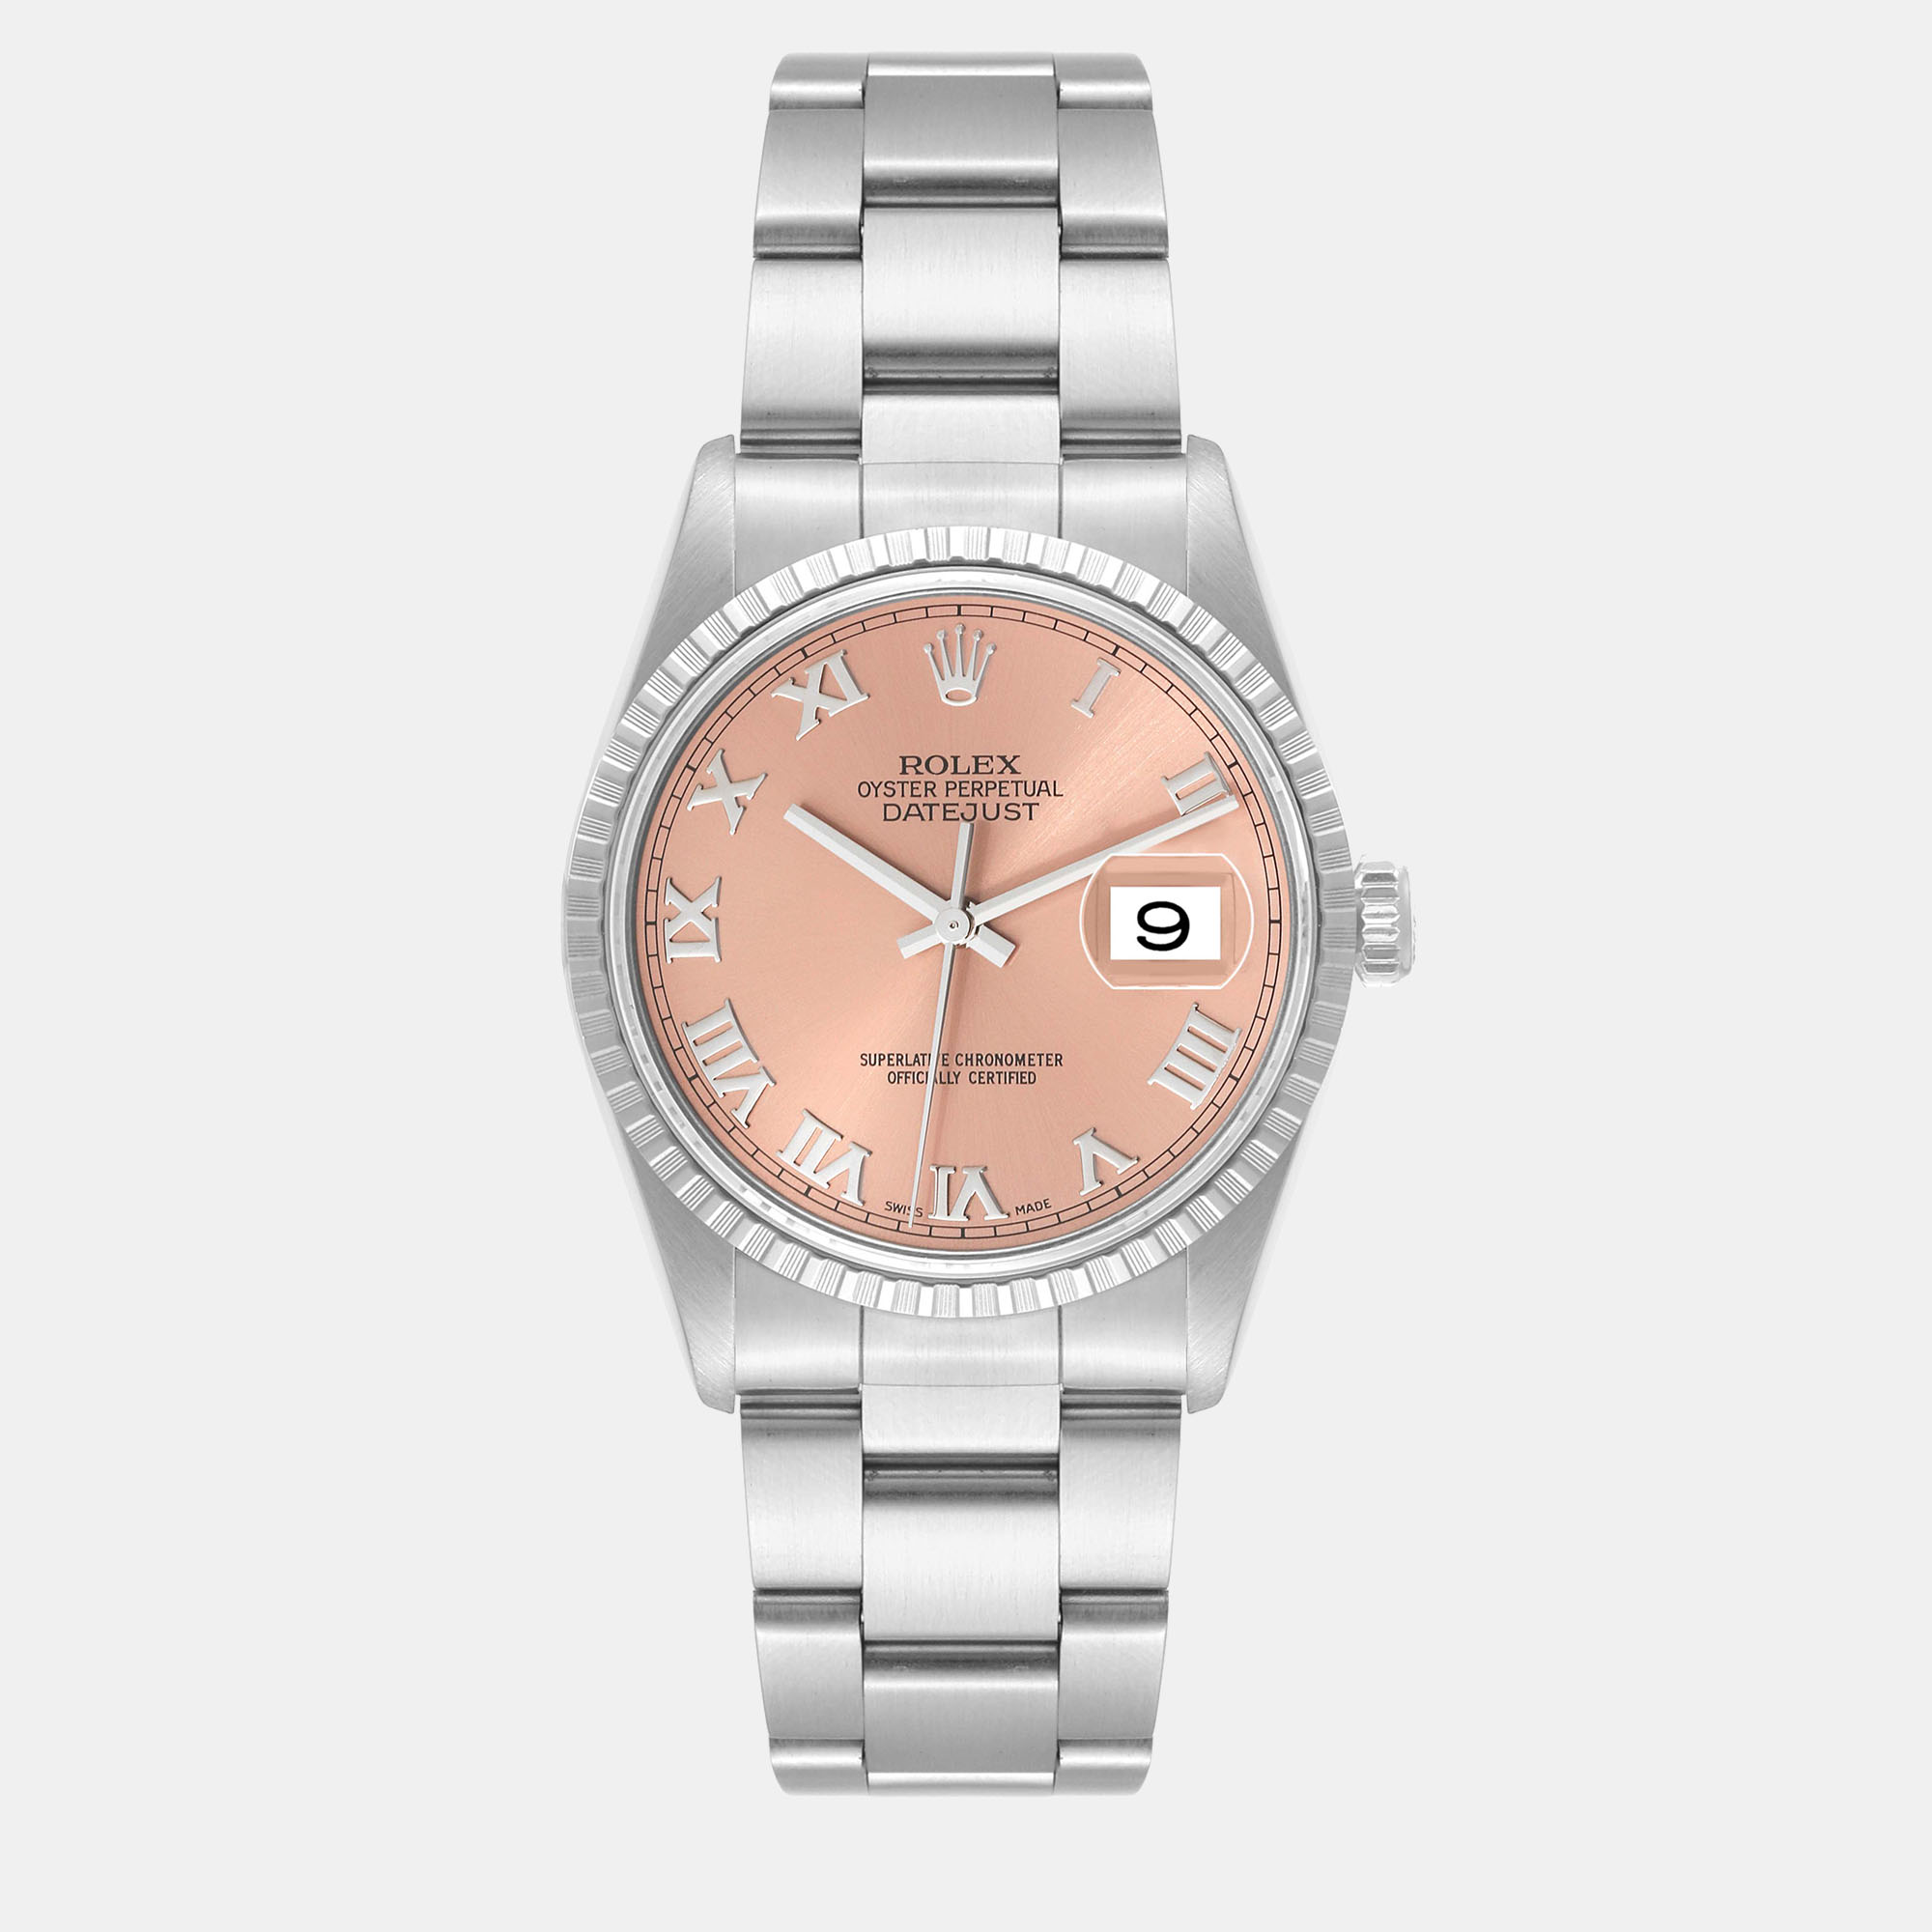 Rolex datejust 36 salmon roman dial steel men's watch 16220 36 mm